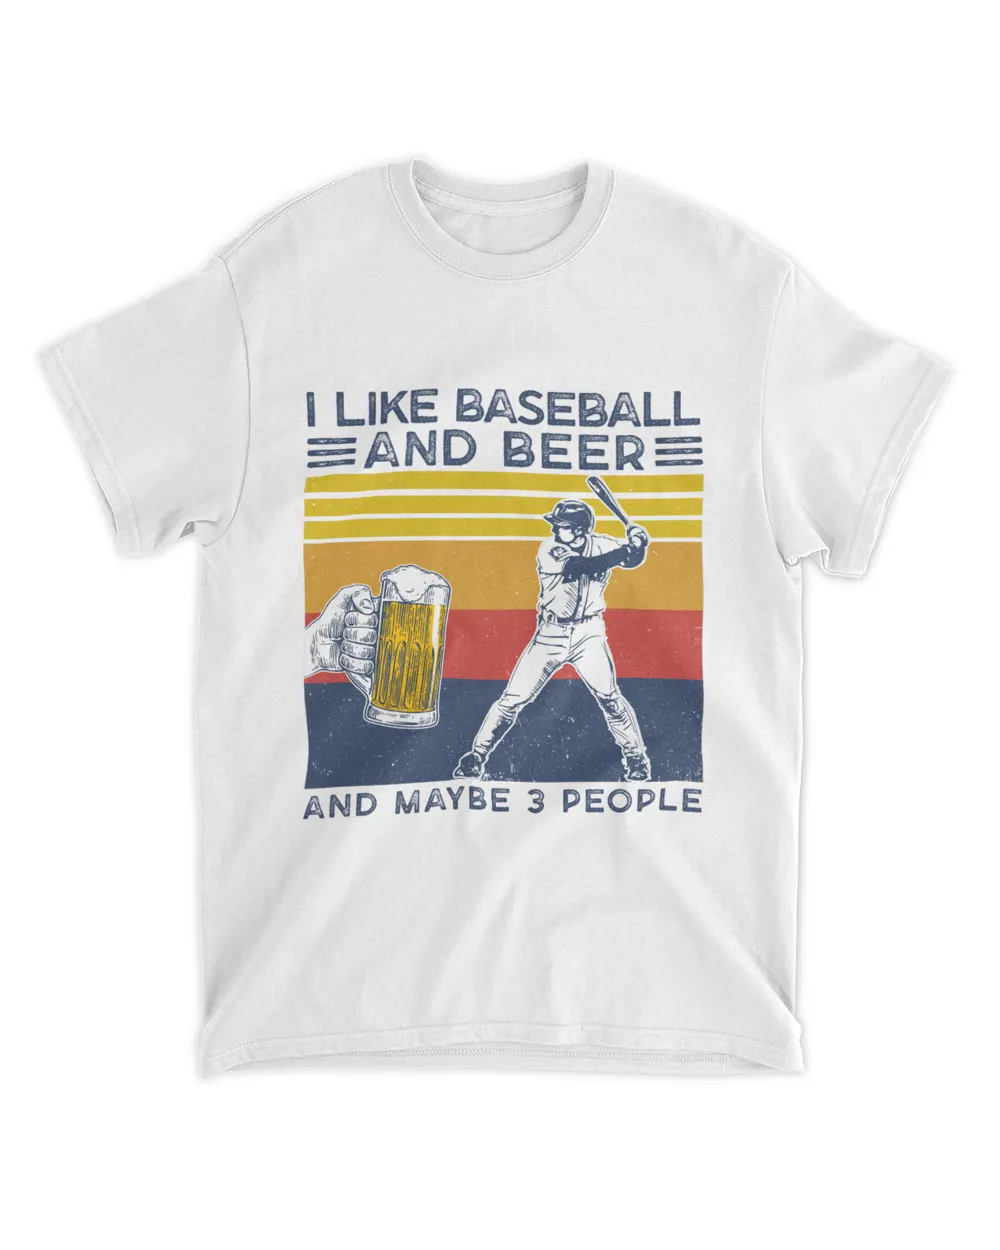 I like baseball and beer and maybe 3 people